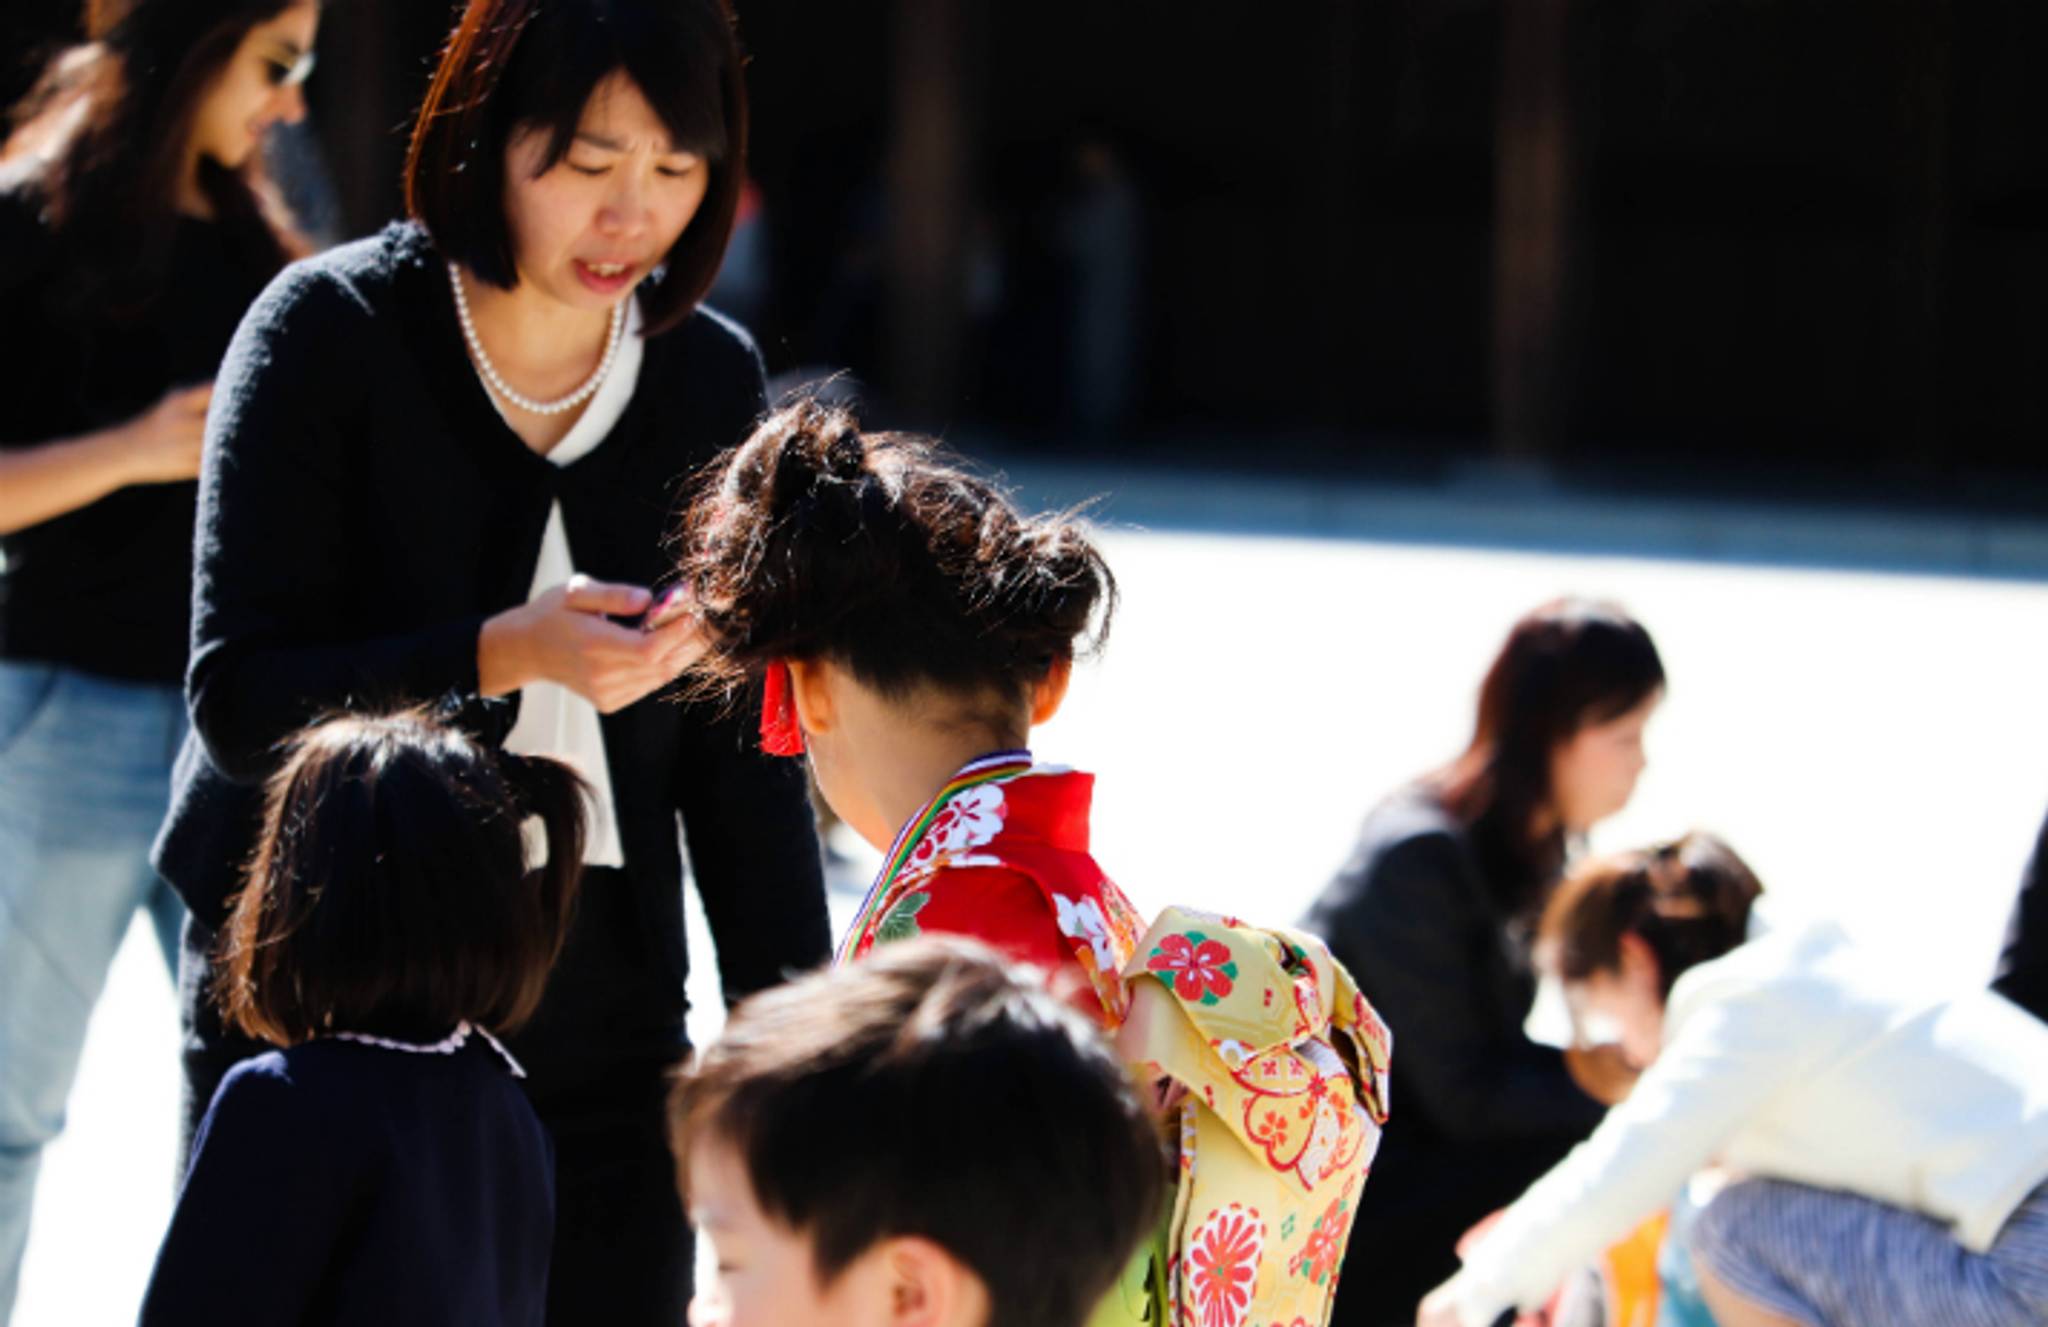 Japanese law targets safer screen habits among kids